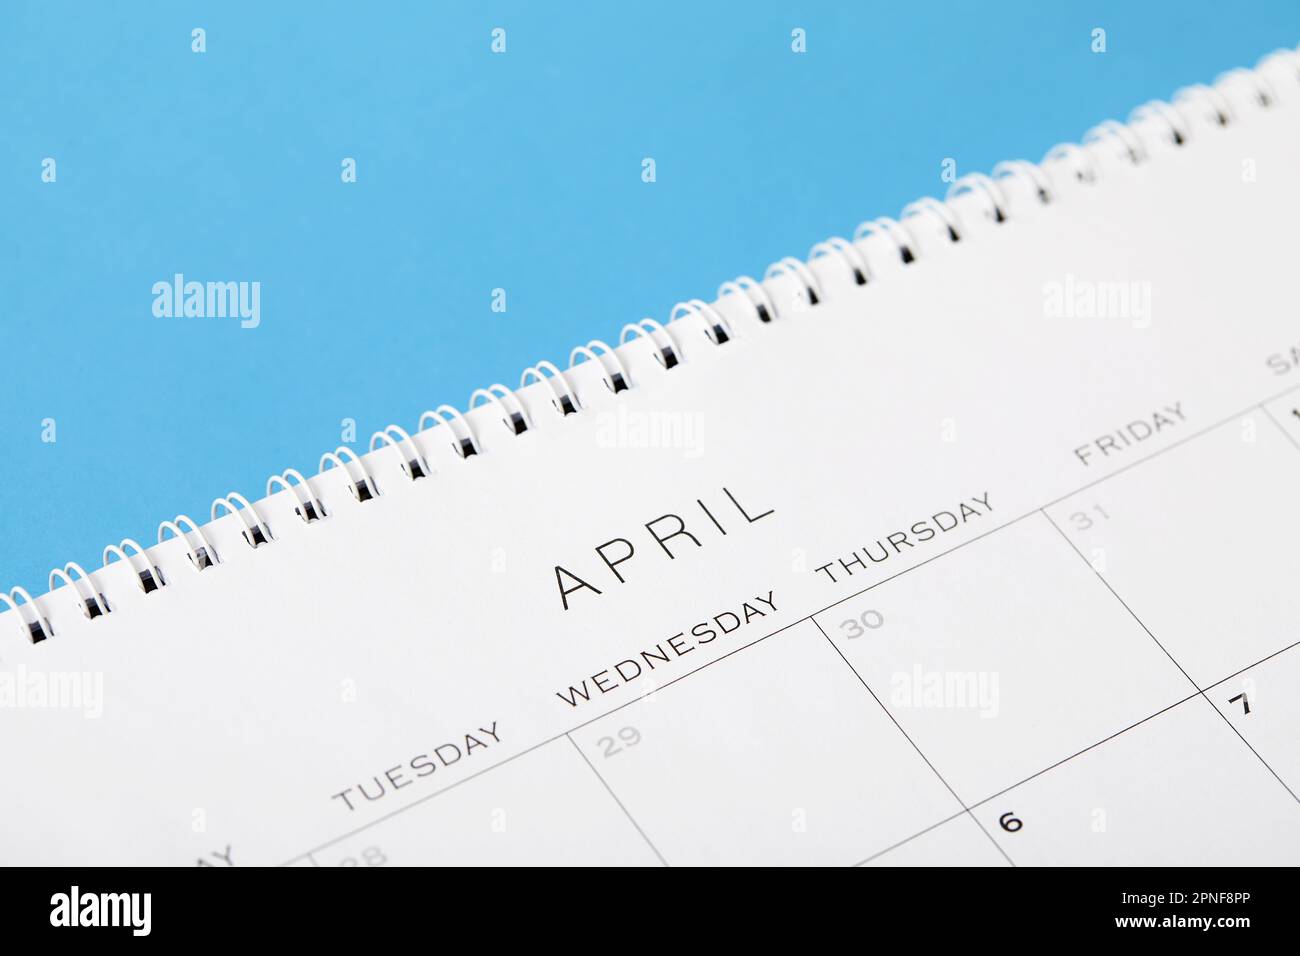 Studio shot of calendar showing April Stock Photo